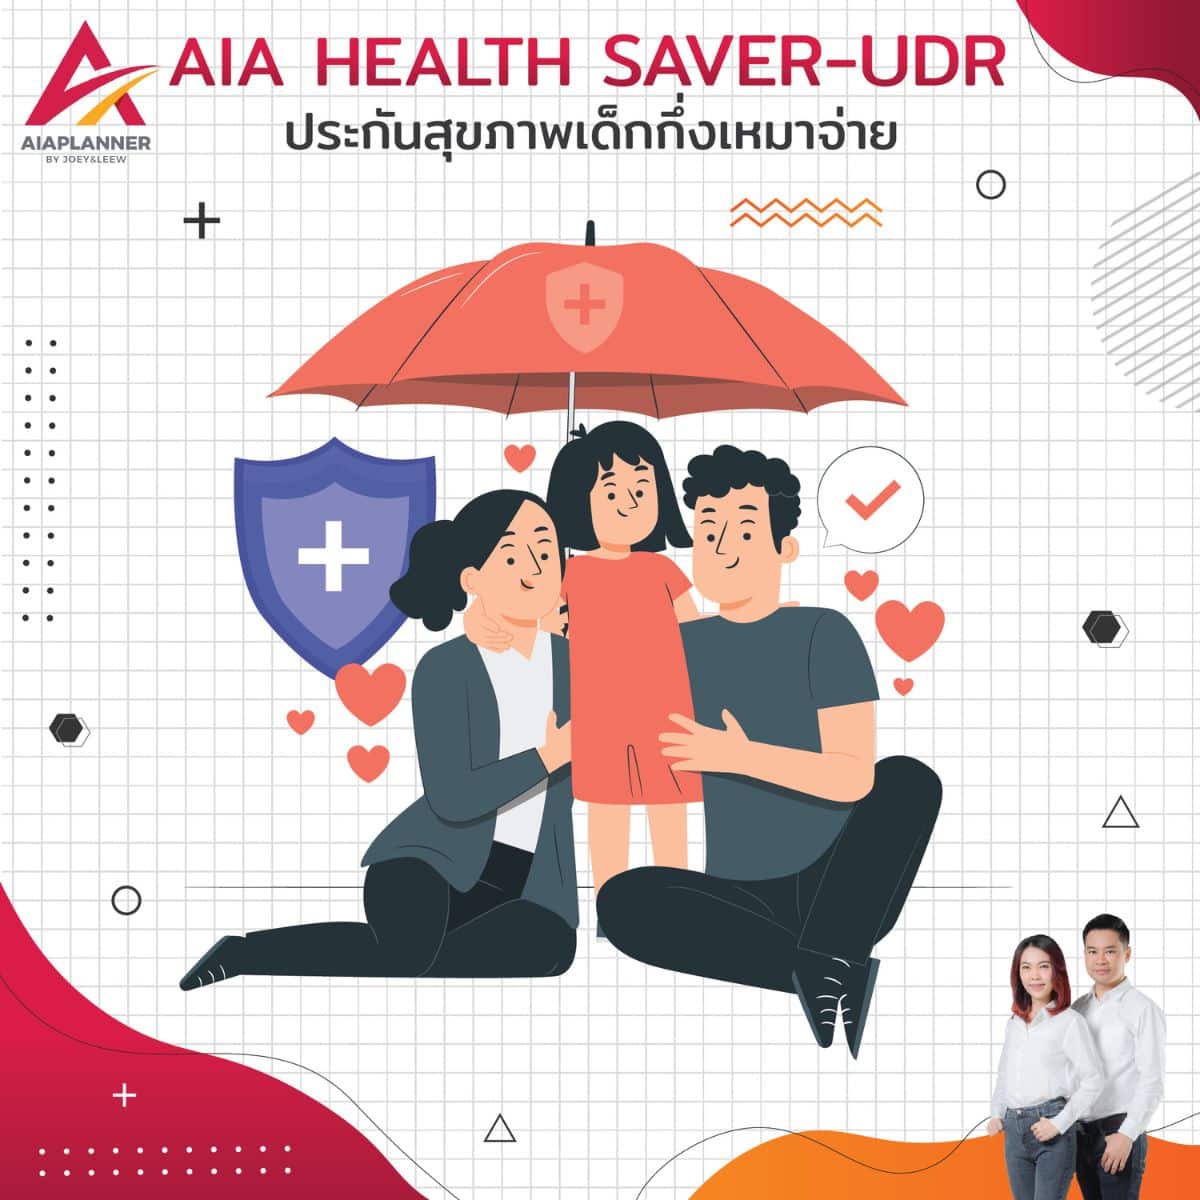 AIA HEALTH SAVER